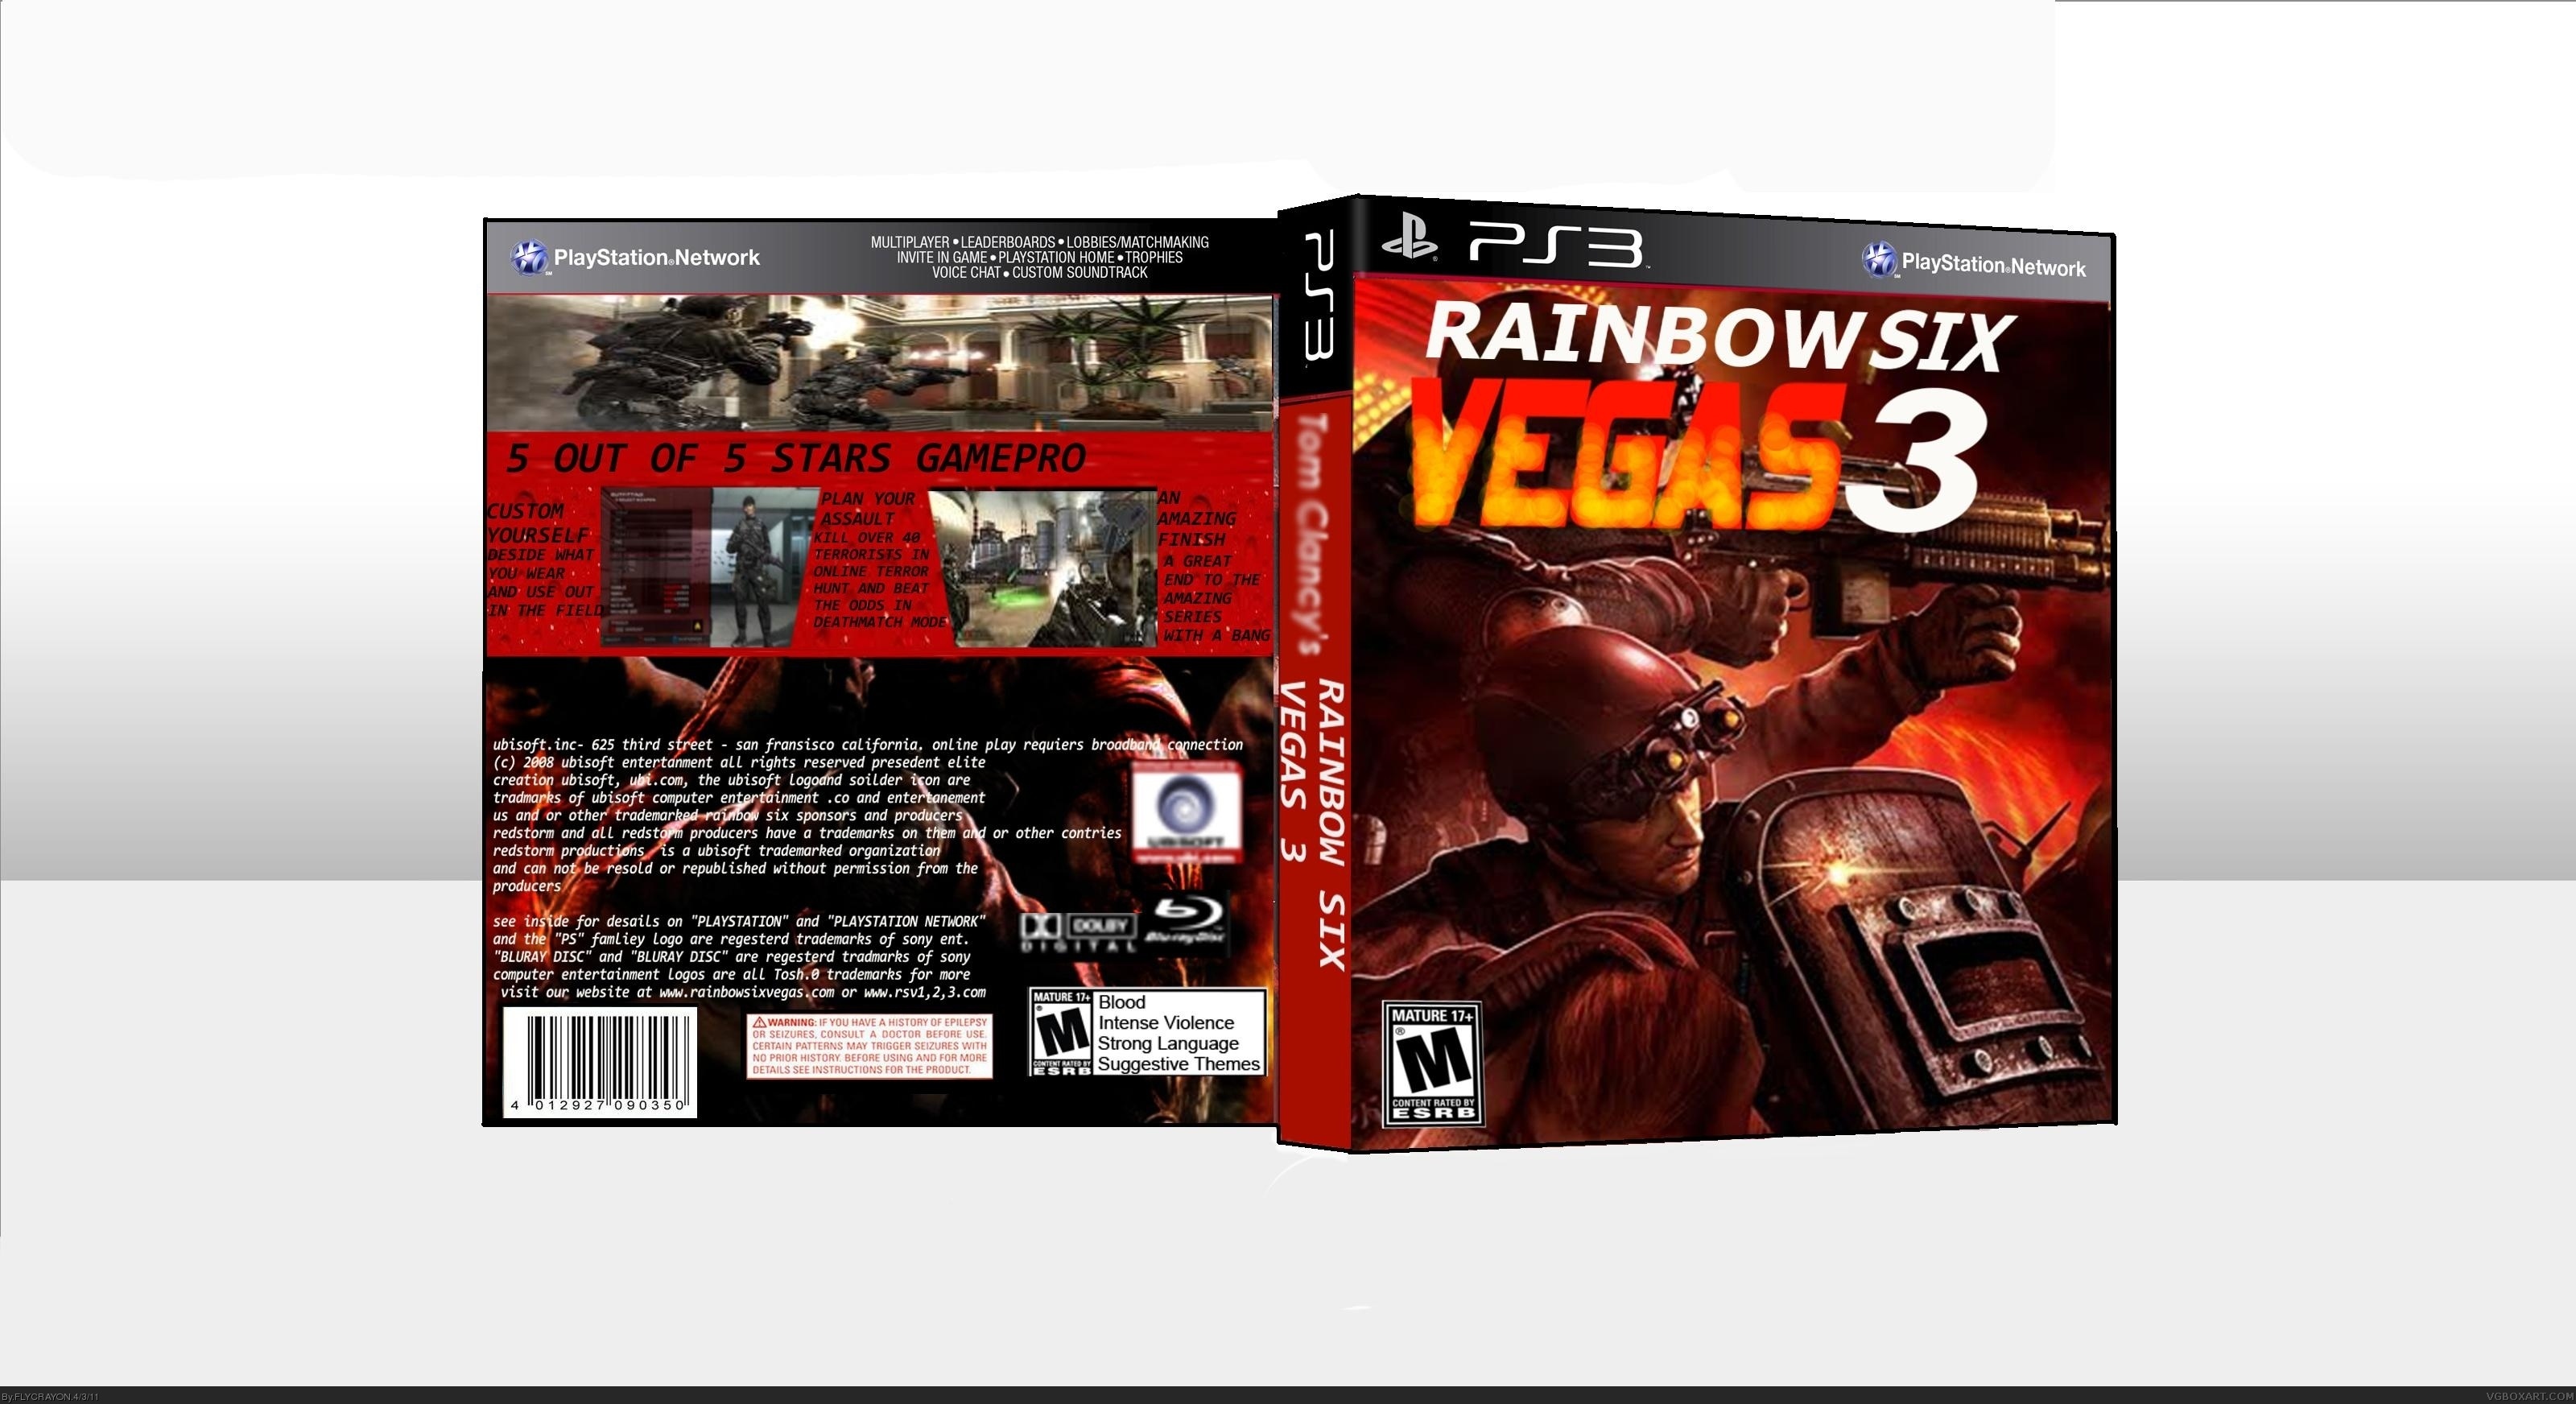 Tom Clancy's Rainbow Six Vegas 3 box cover